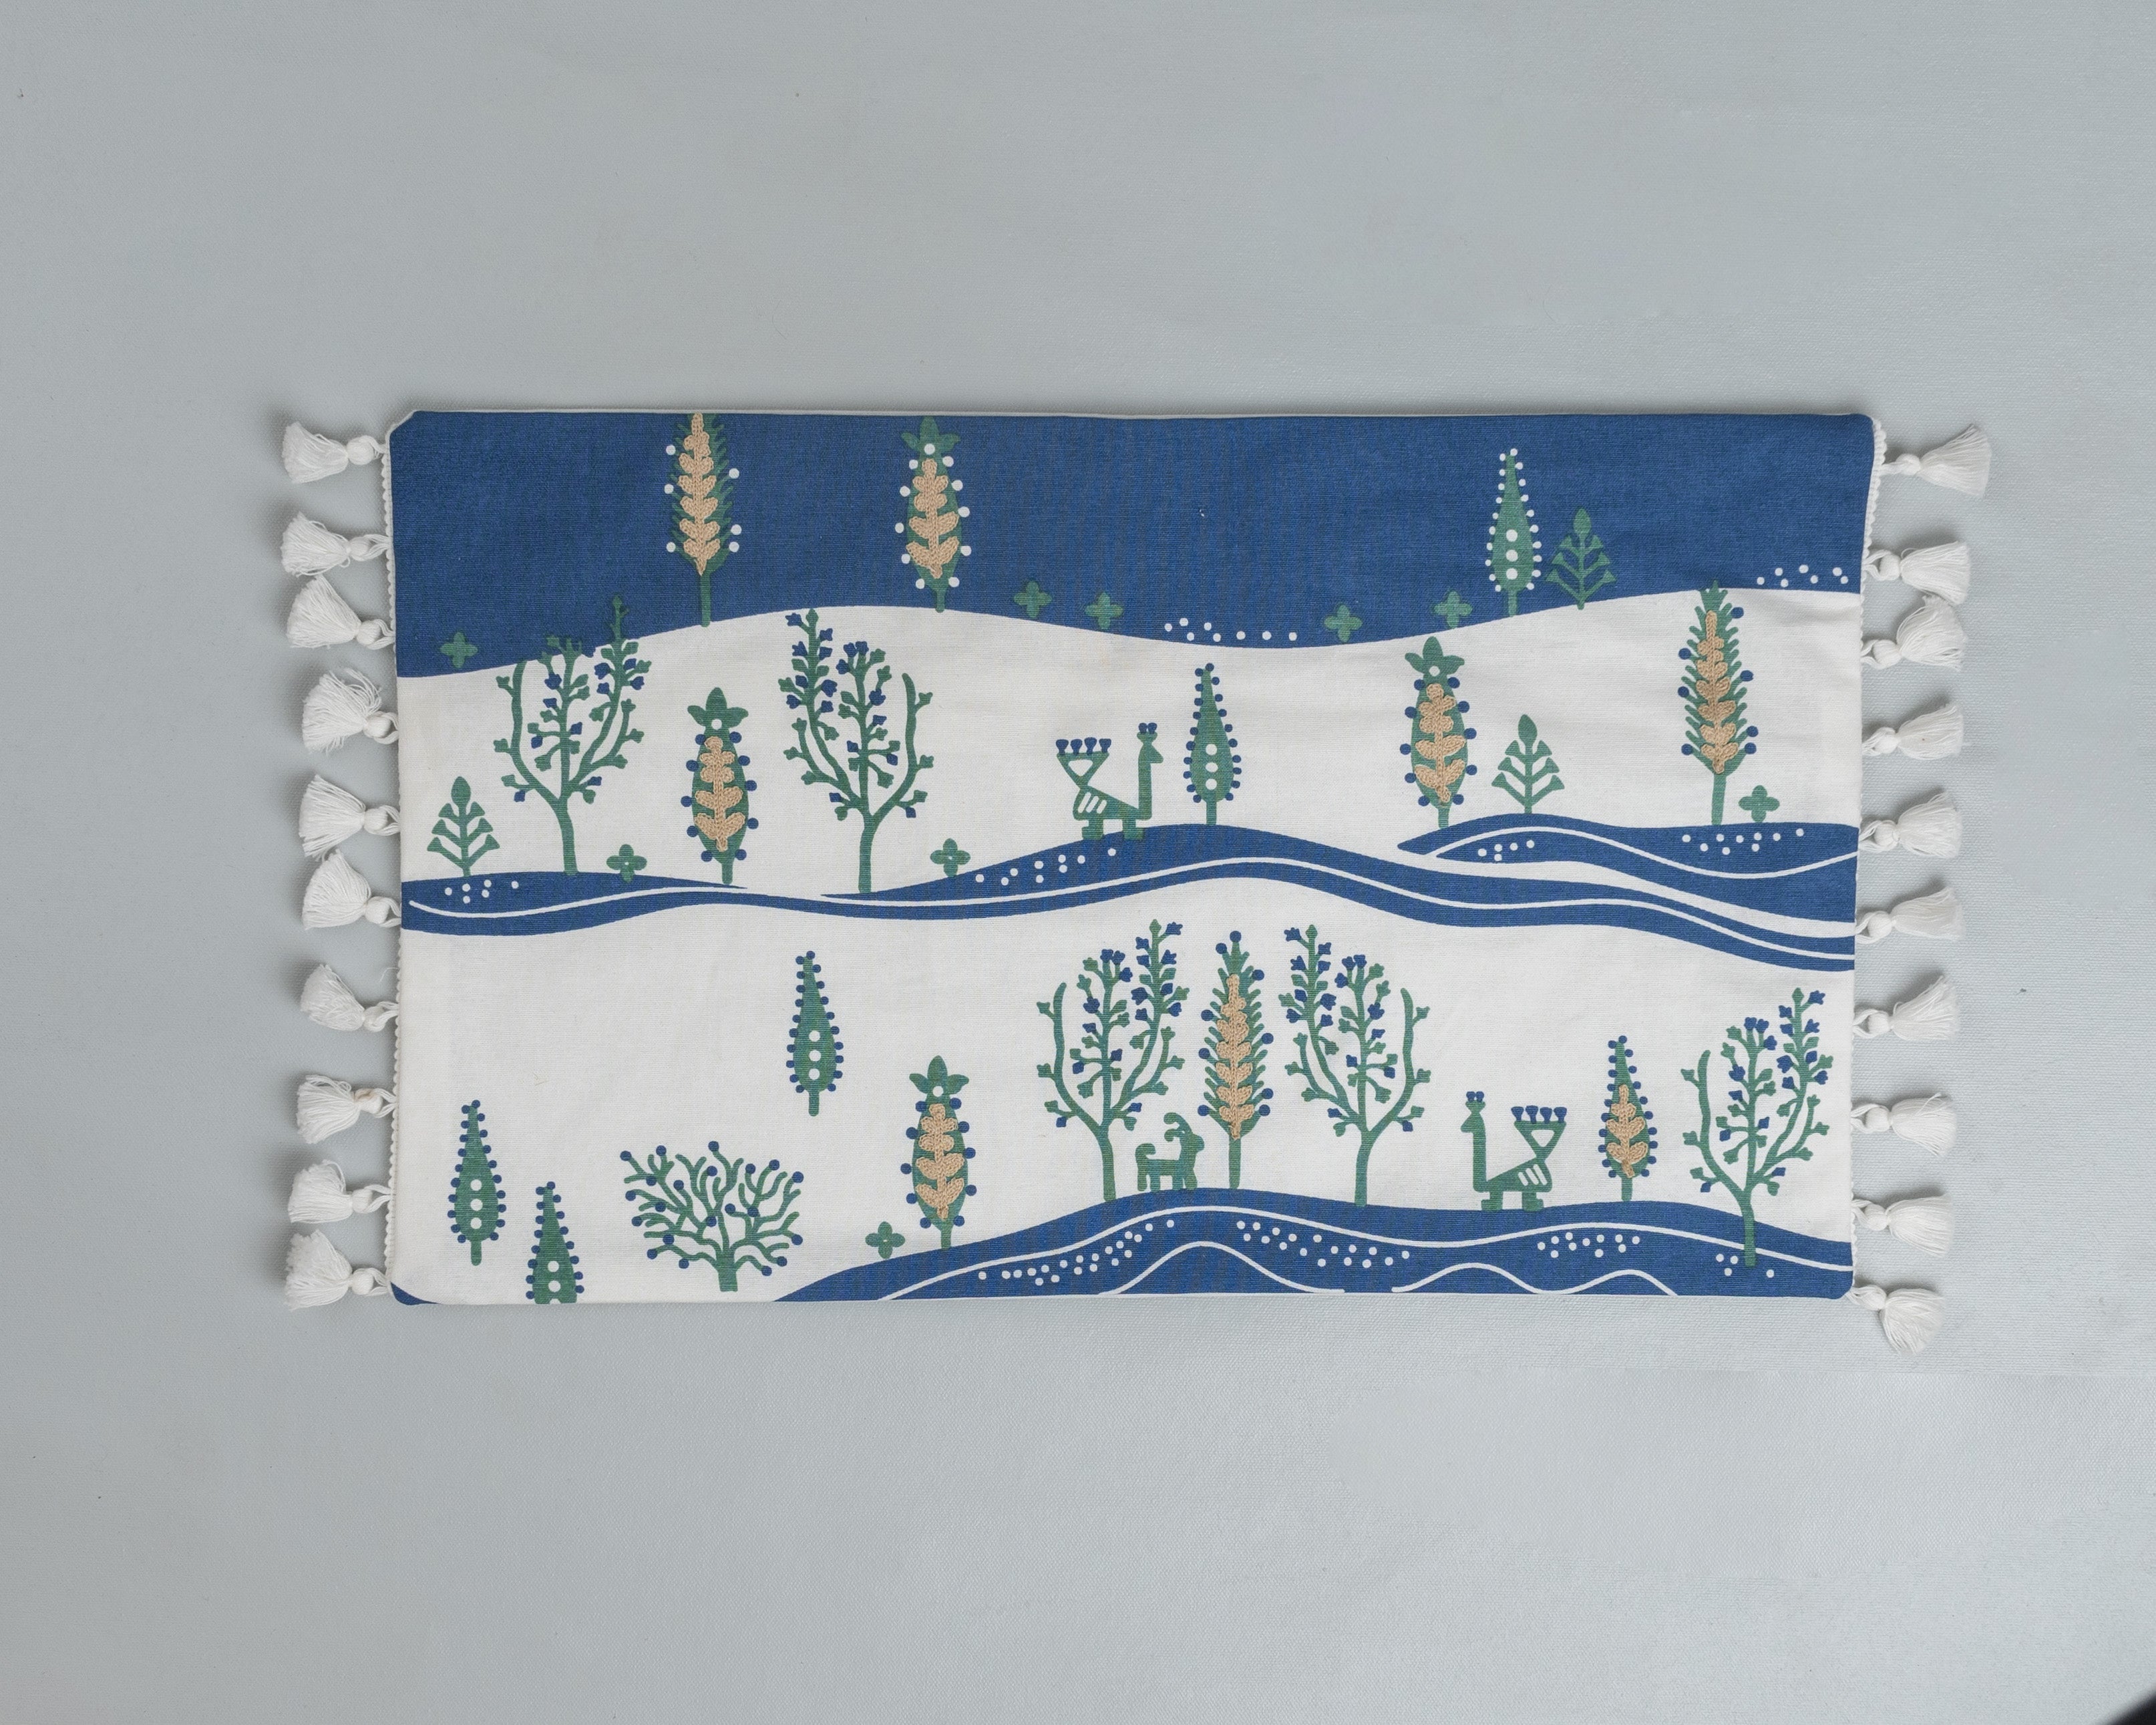 Timberland 100% cotton embroidered boho cushion cover combo set for sofa- Indigo and green